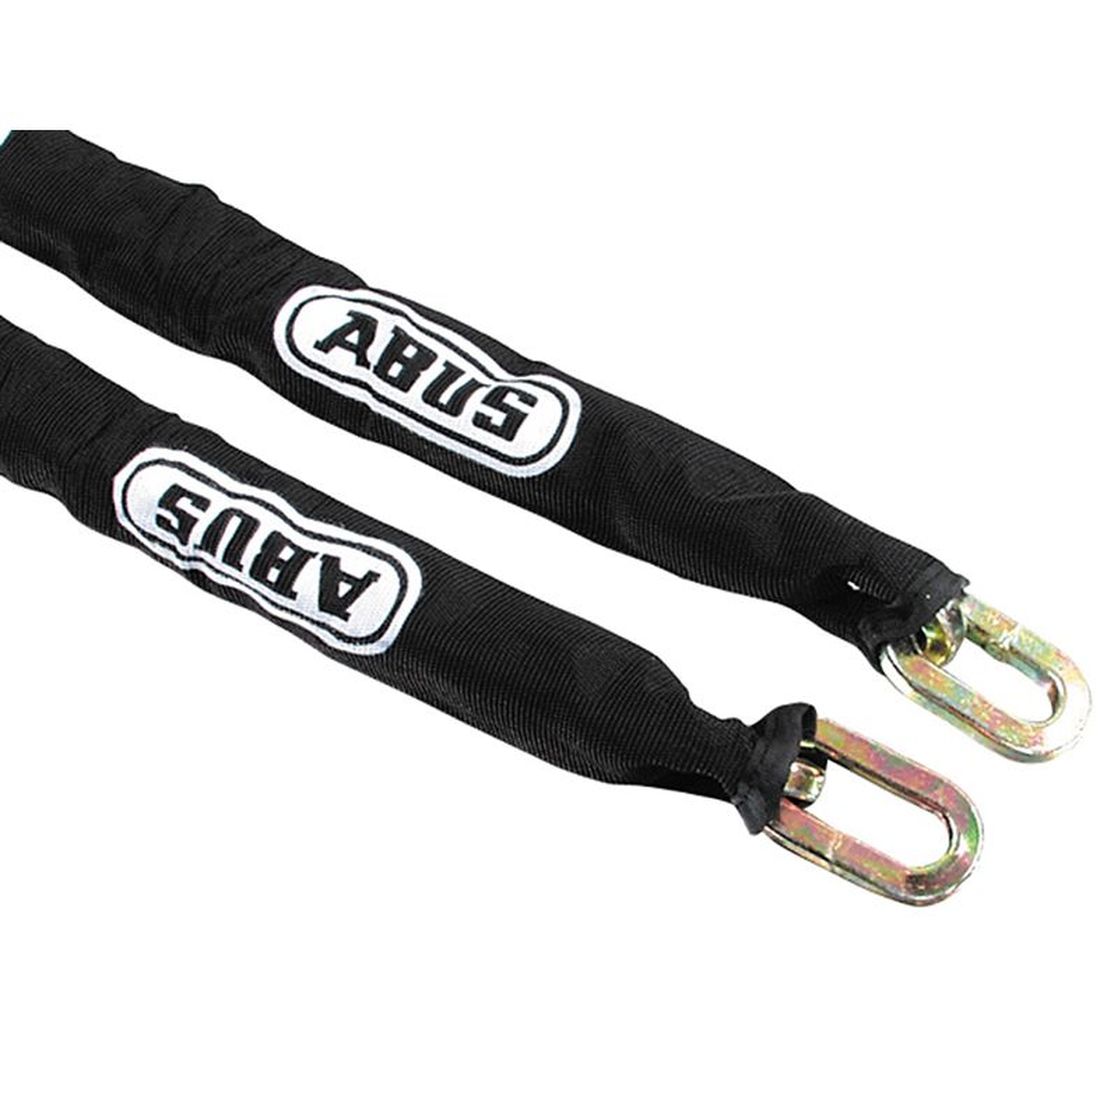 ABUS 10KS/110 Security Chain Length 110cm Link Diameter 10mm                         